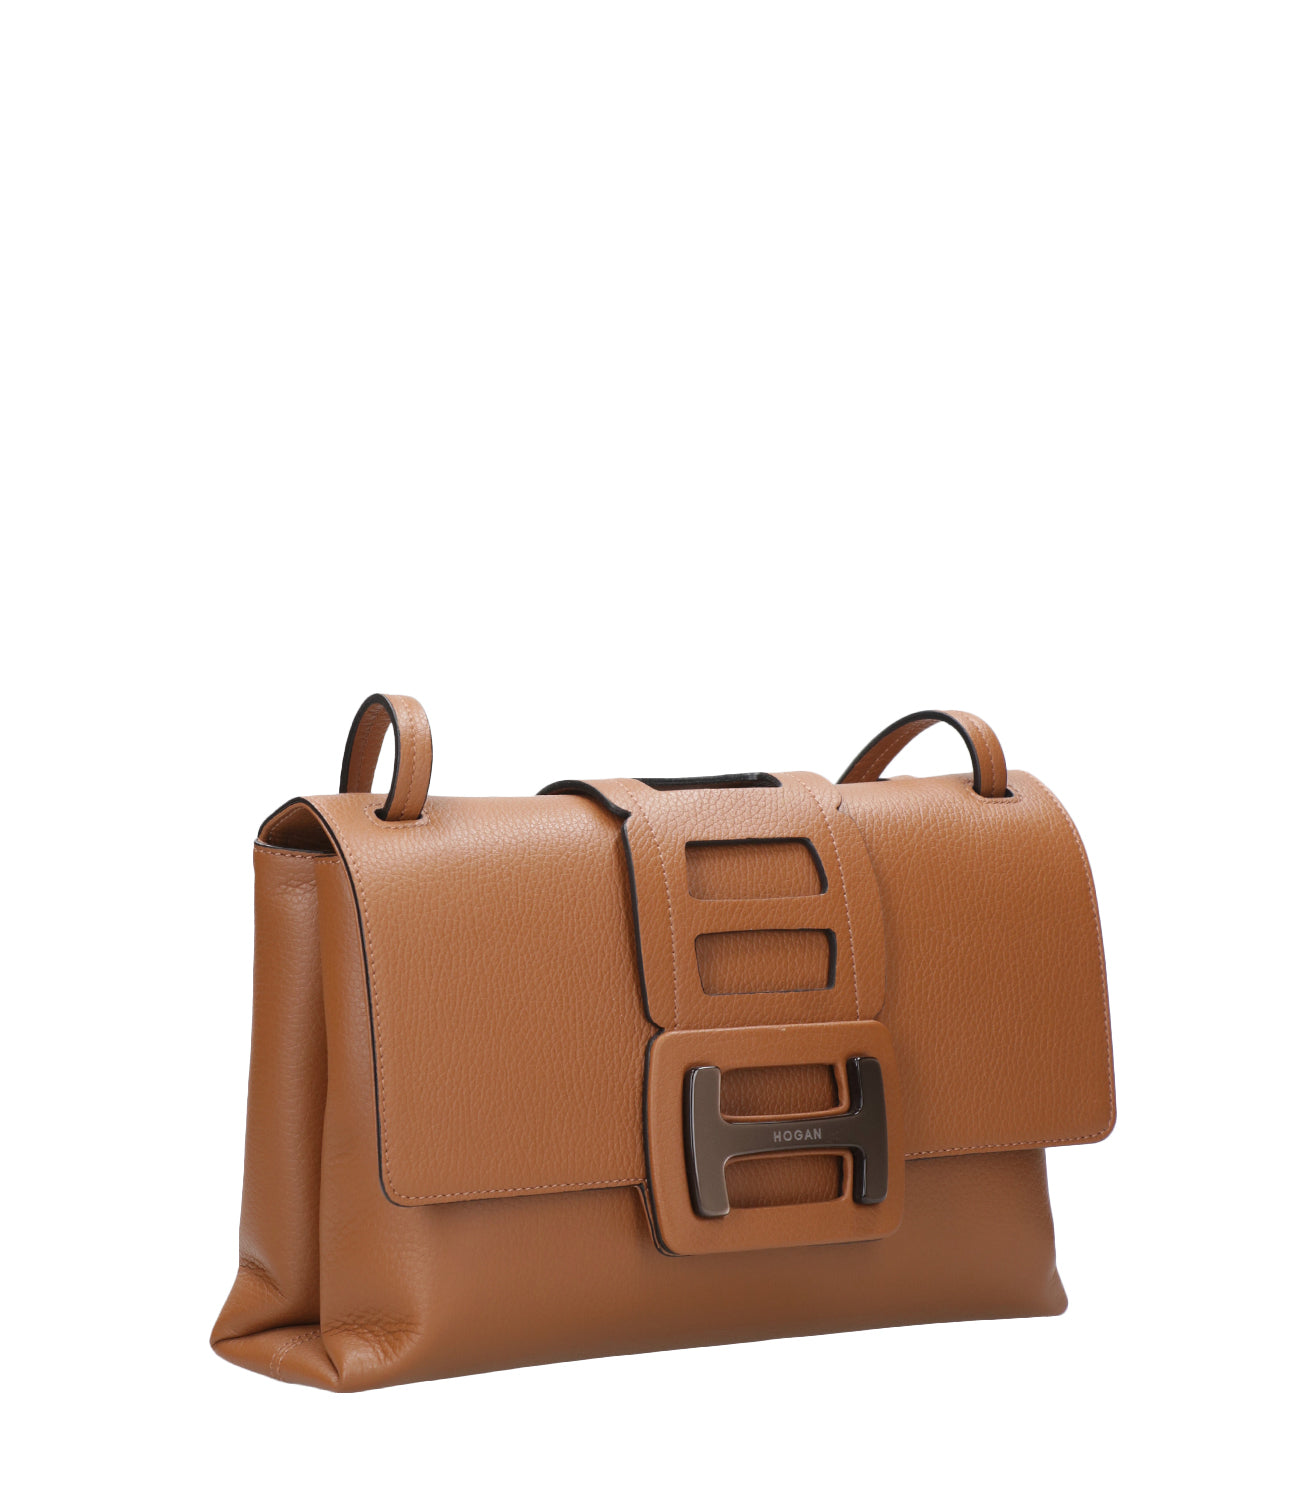 Hogan | Leather Bag